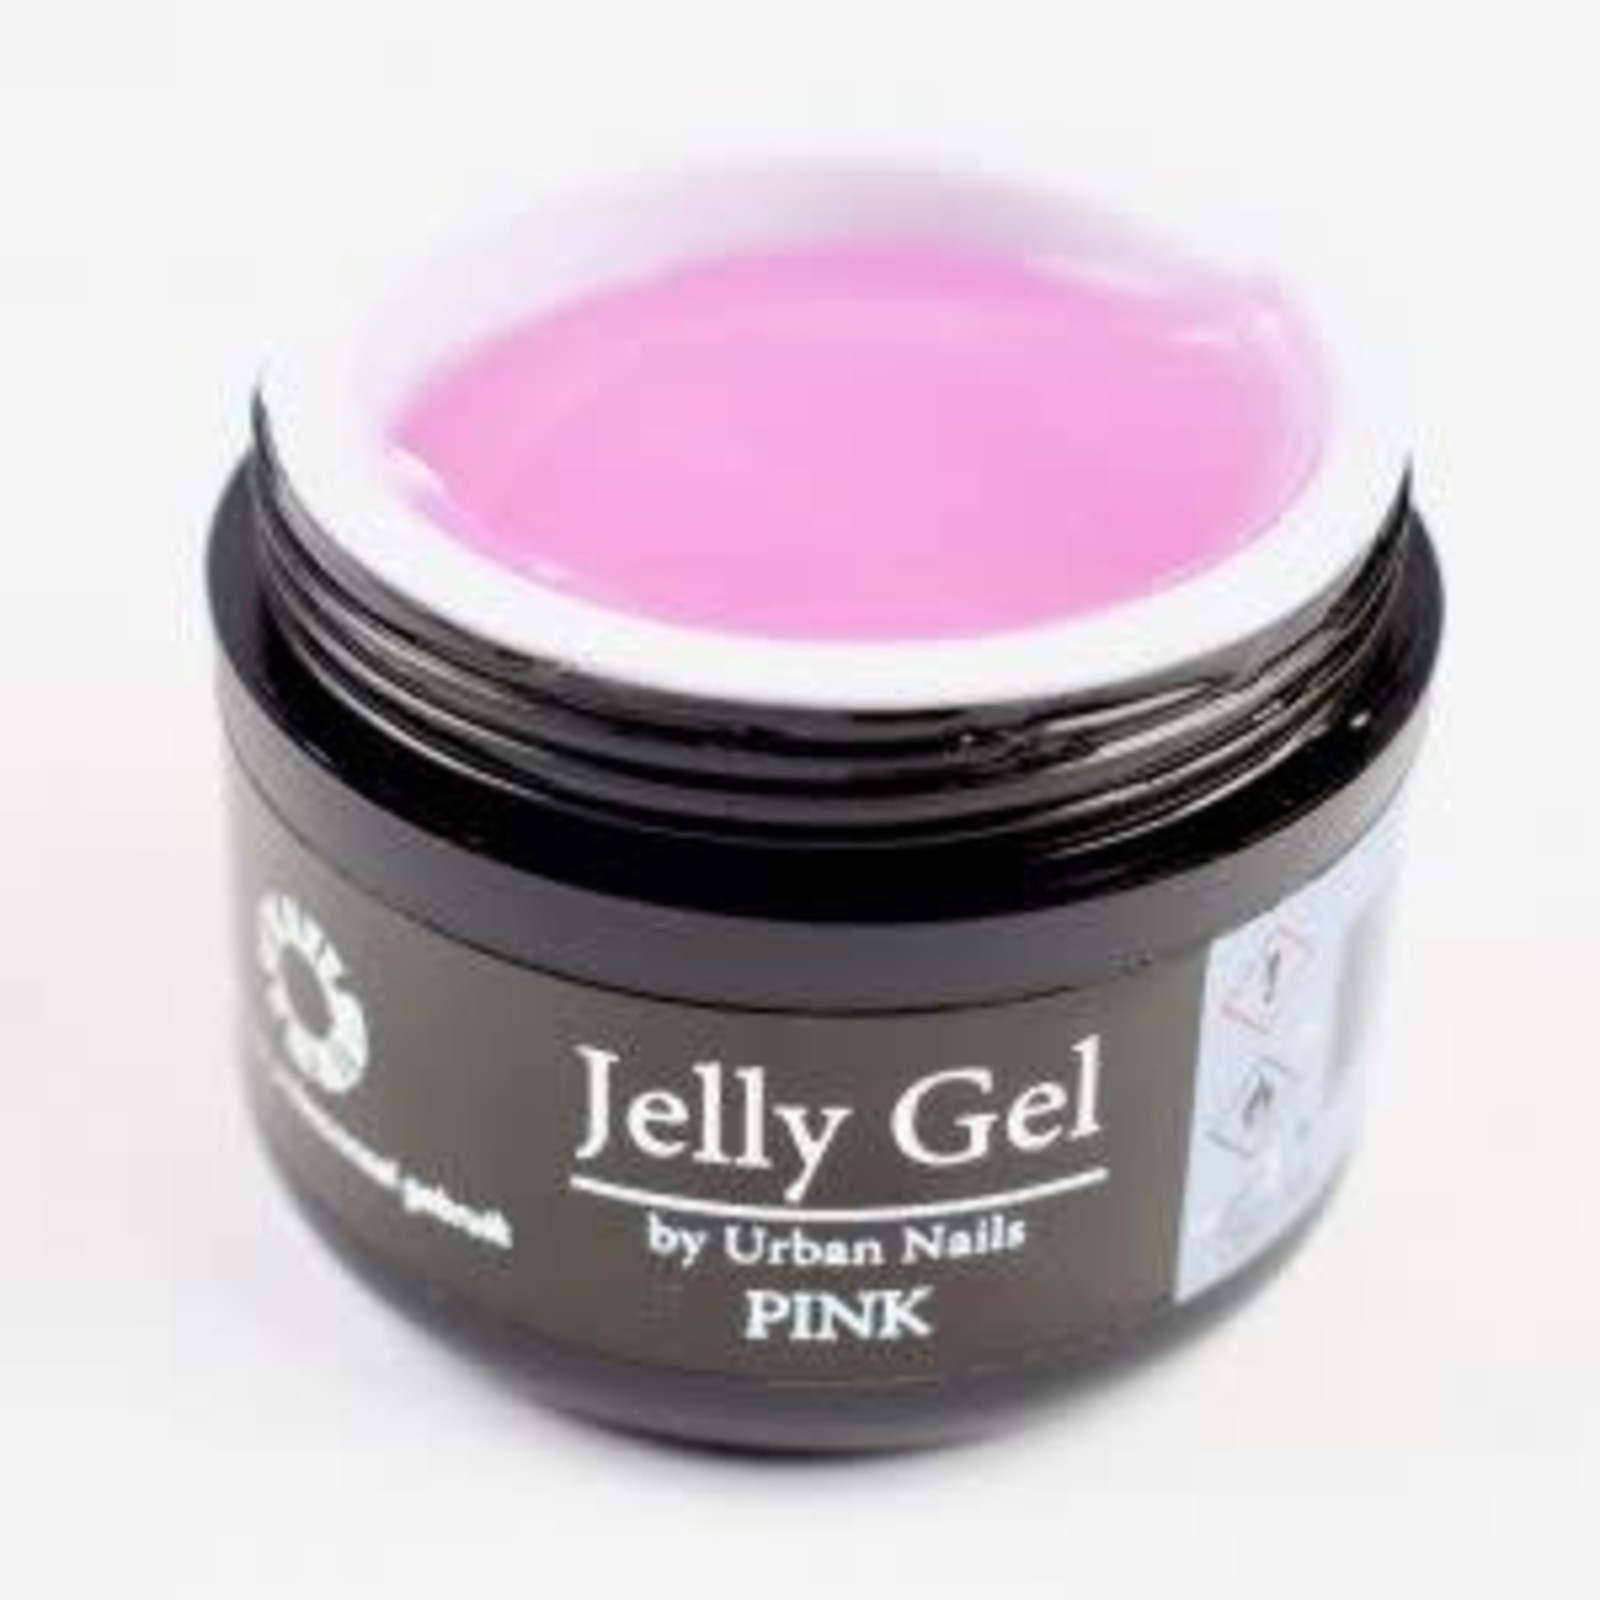 Urban nails Jelly gel pink 30 gr